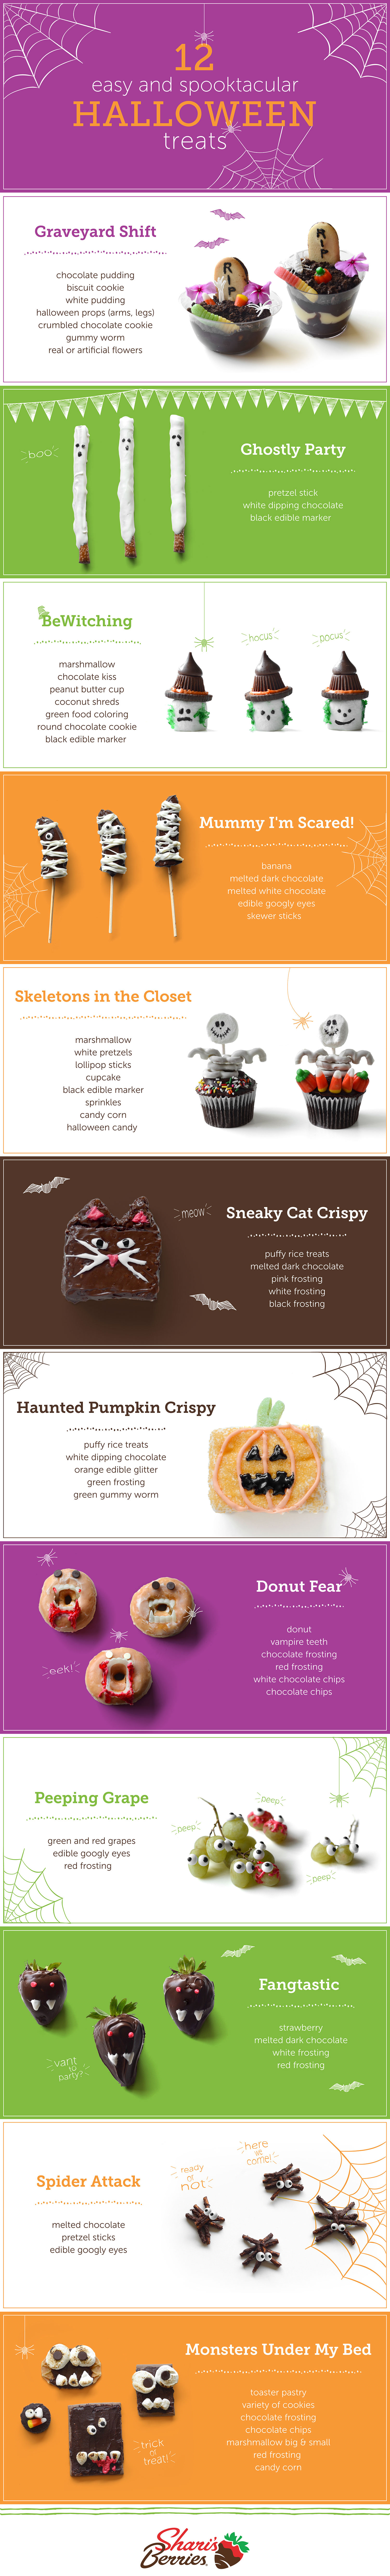 11 Easy and Spooktacular Halloween Treats